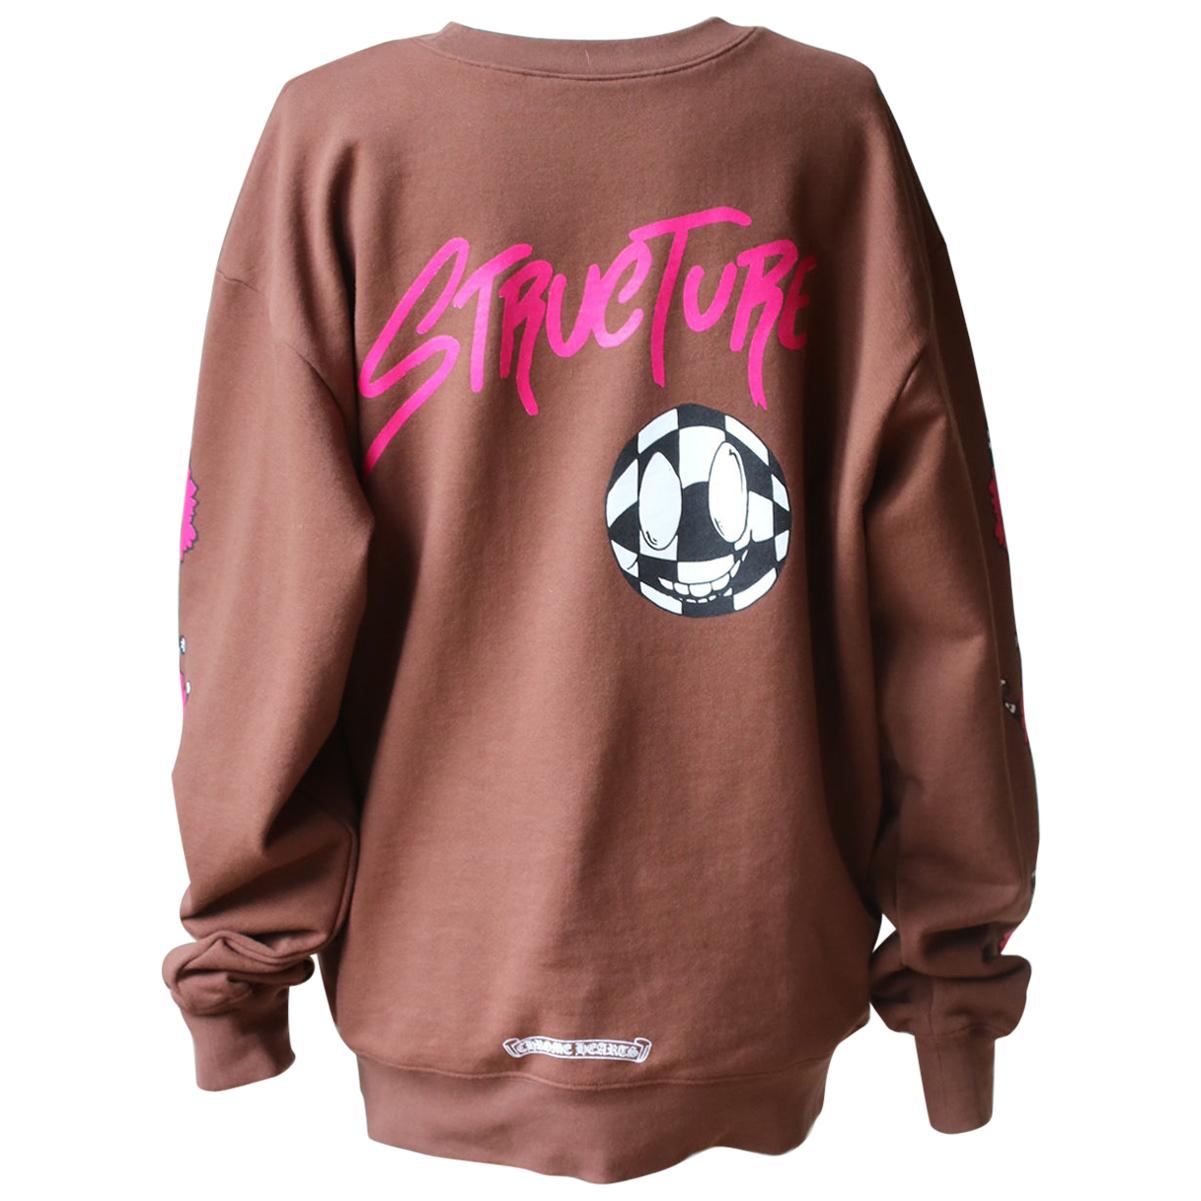 Chrome Hearts + Matty Boy Printed Cotton Jersey Sweatshirt